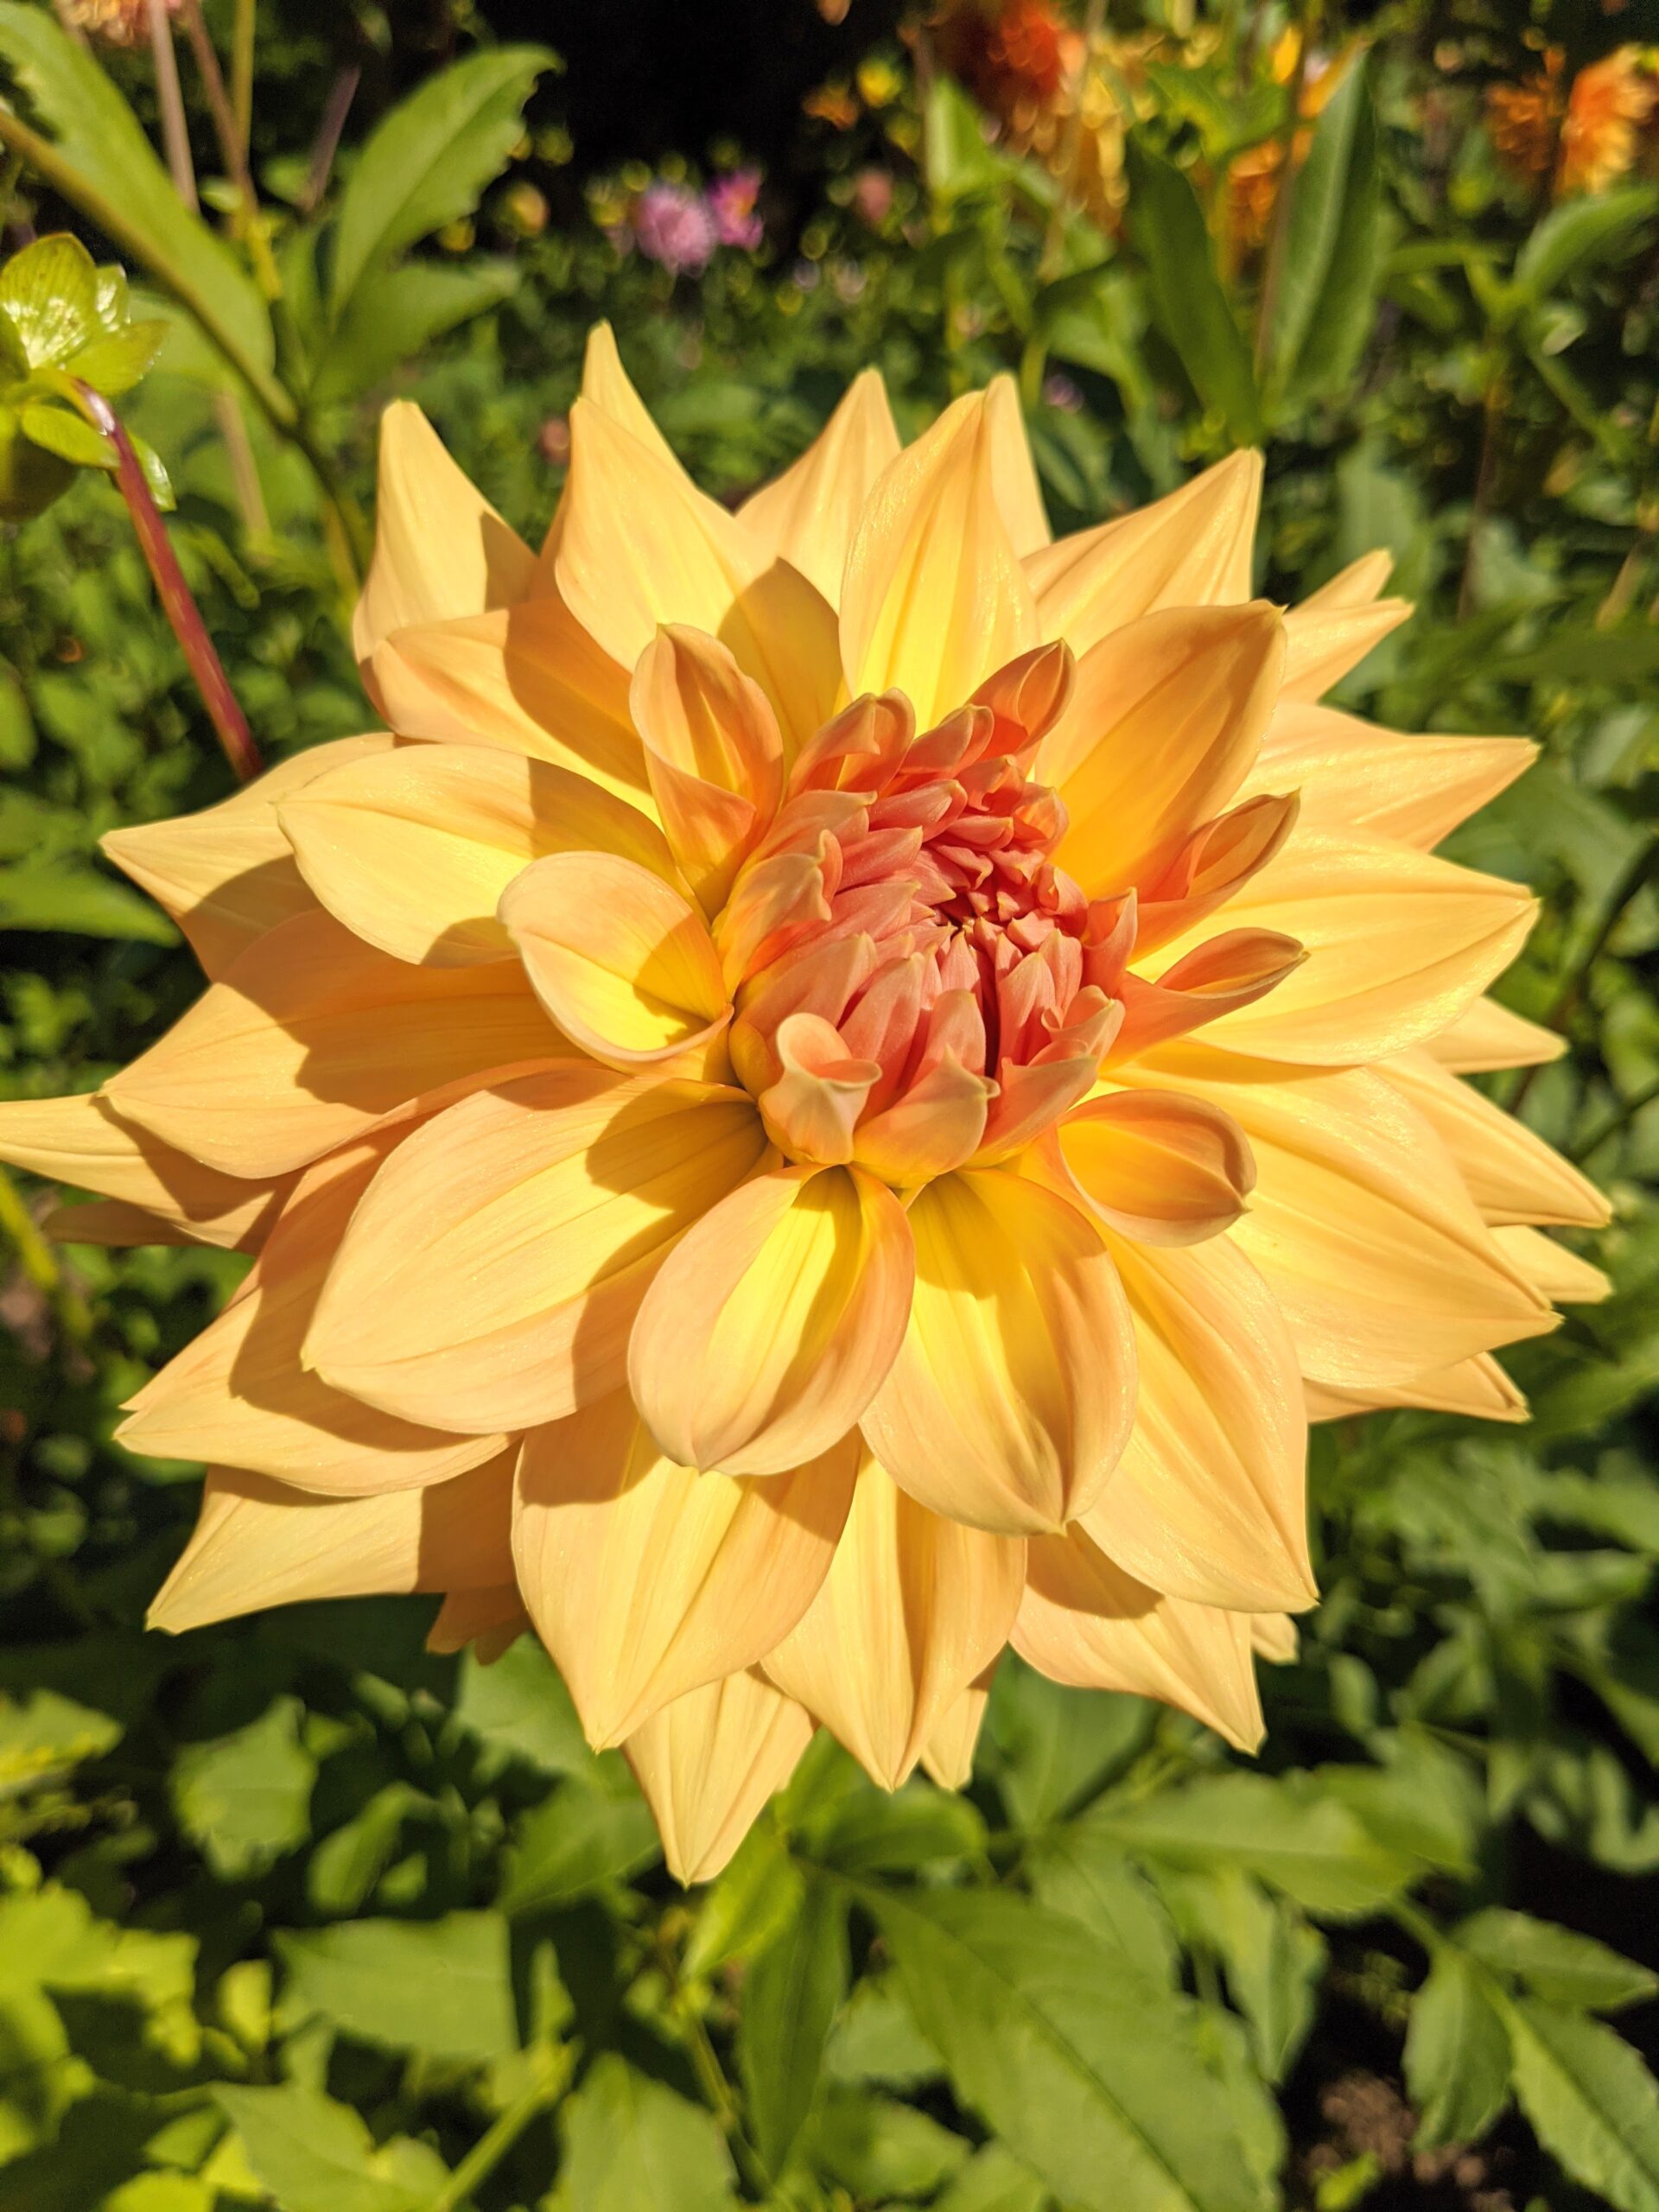 More Dahlias in Bloom at My Farm - The Martha Stewart Blog